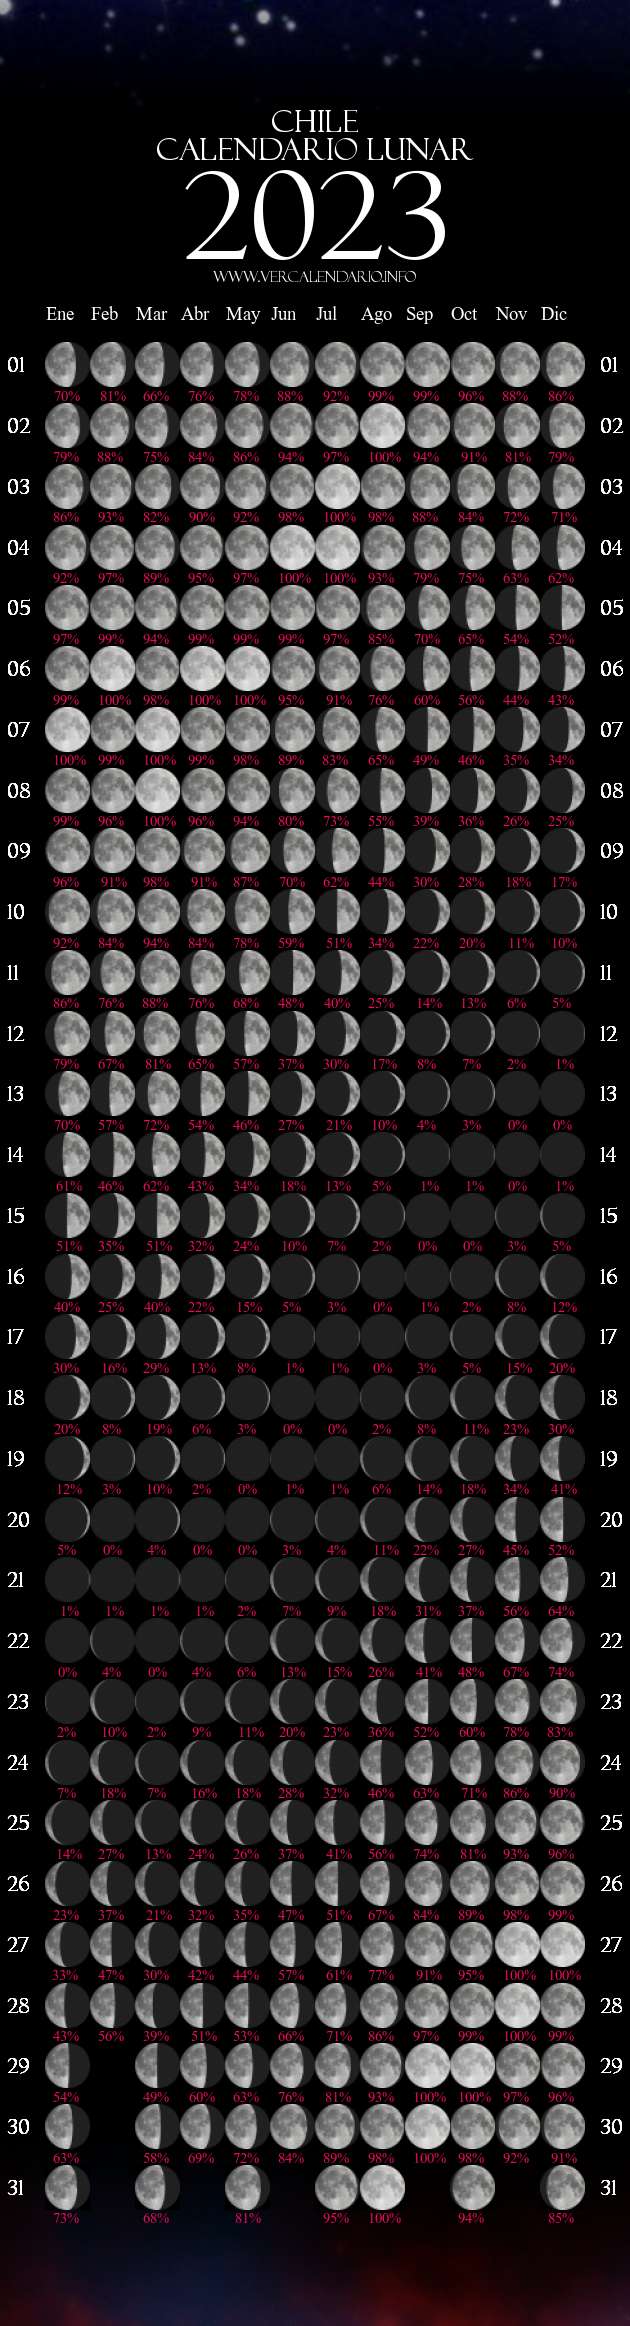 Calendario Lunar 2023 (Chile)